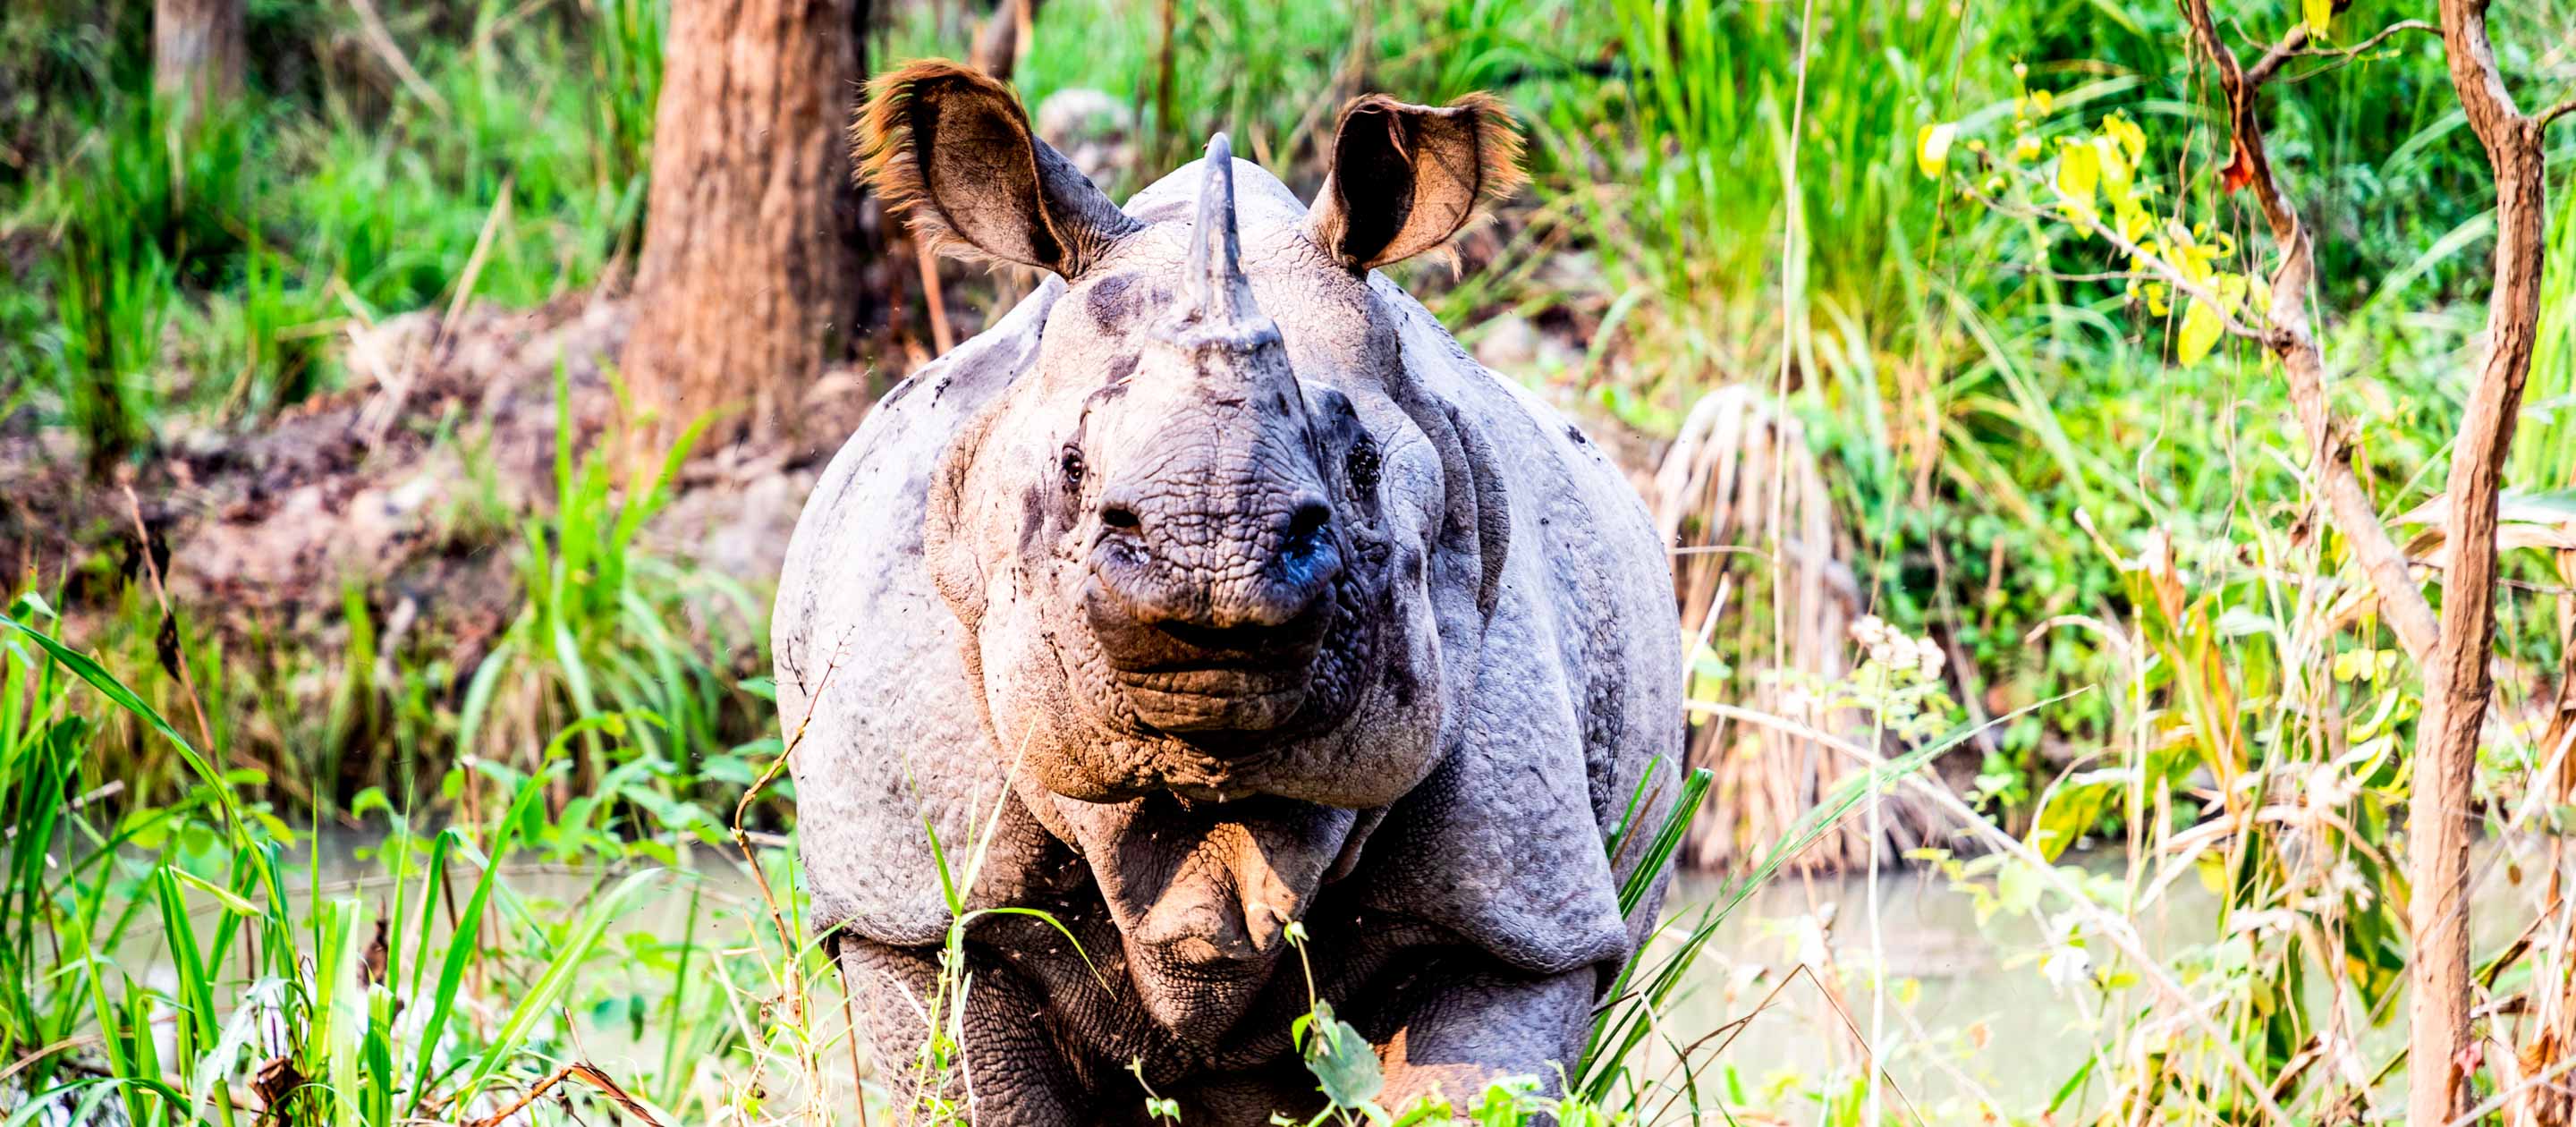 A one-horned rhinoceros in Chitwan National Park, Nepal